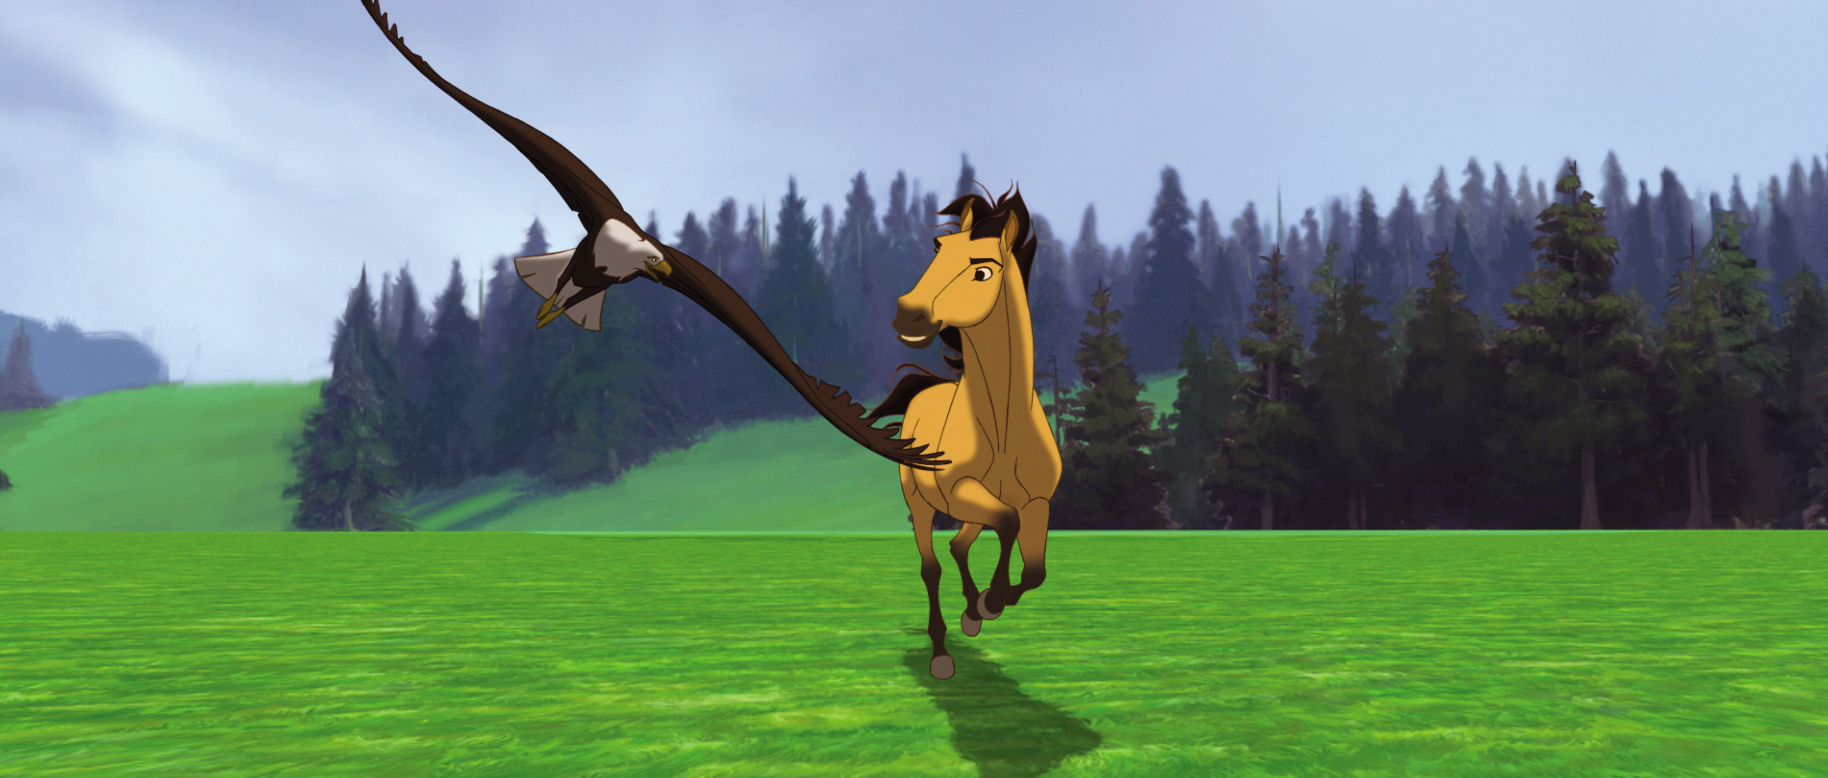 free spirit wallpaper,horse,fictional character,wildlife,stallion,animated cartoon